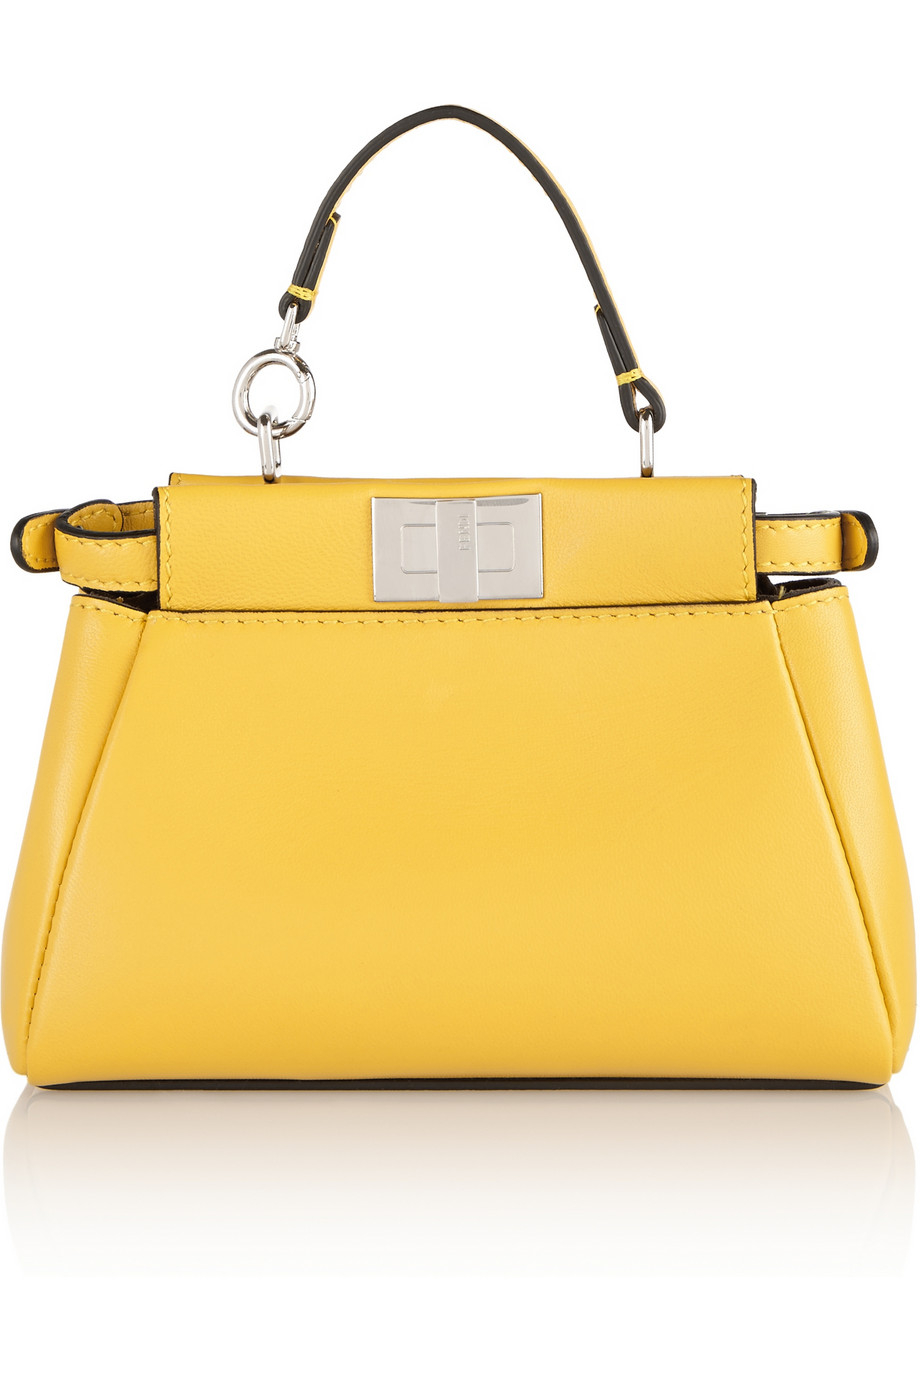 Fendi Peekaboo Micro Leather Shoulder Bag in Yellow | Lyst